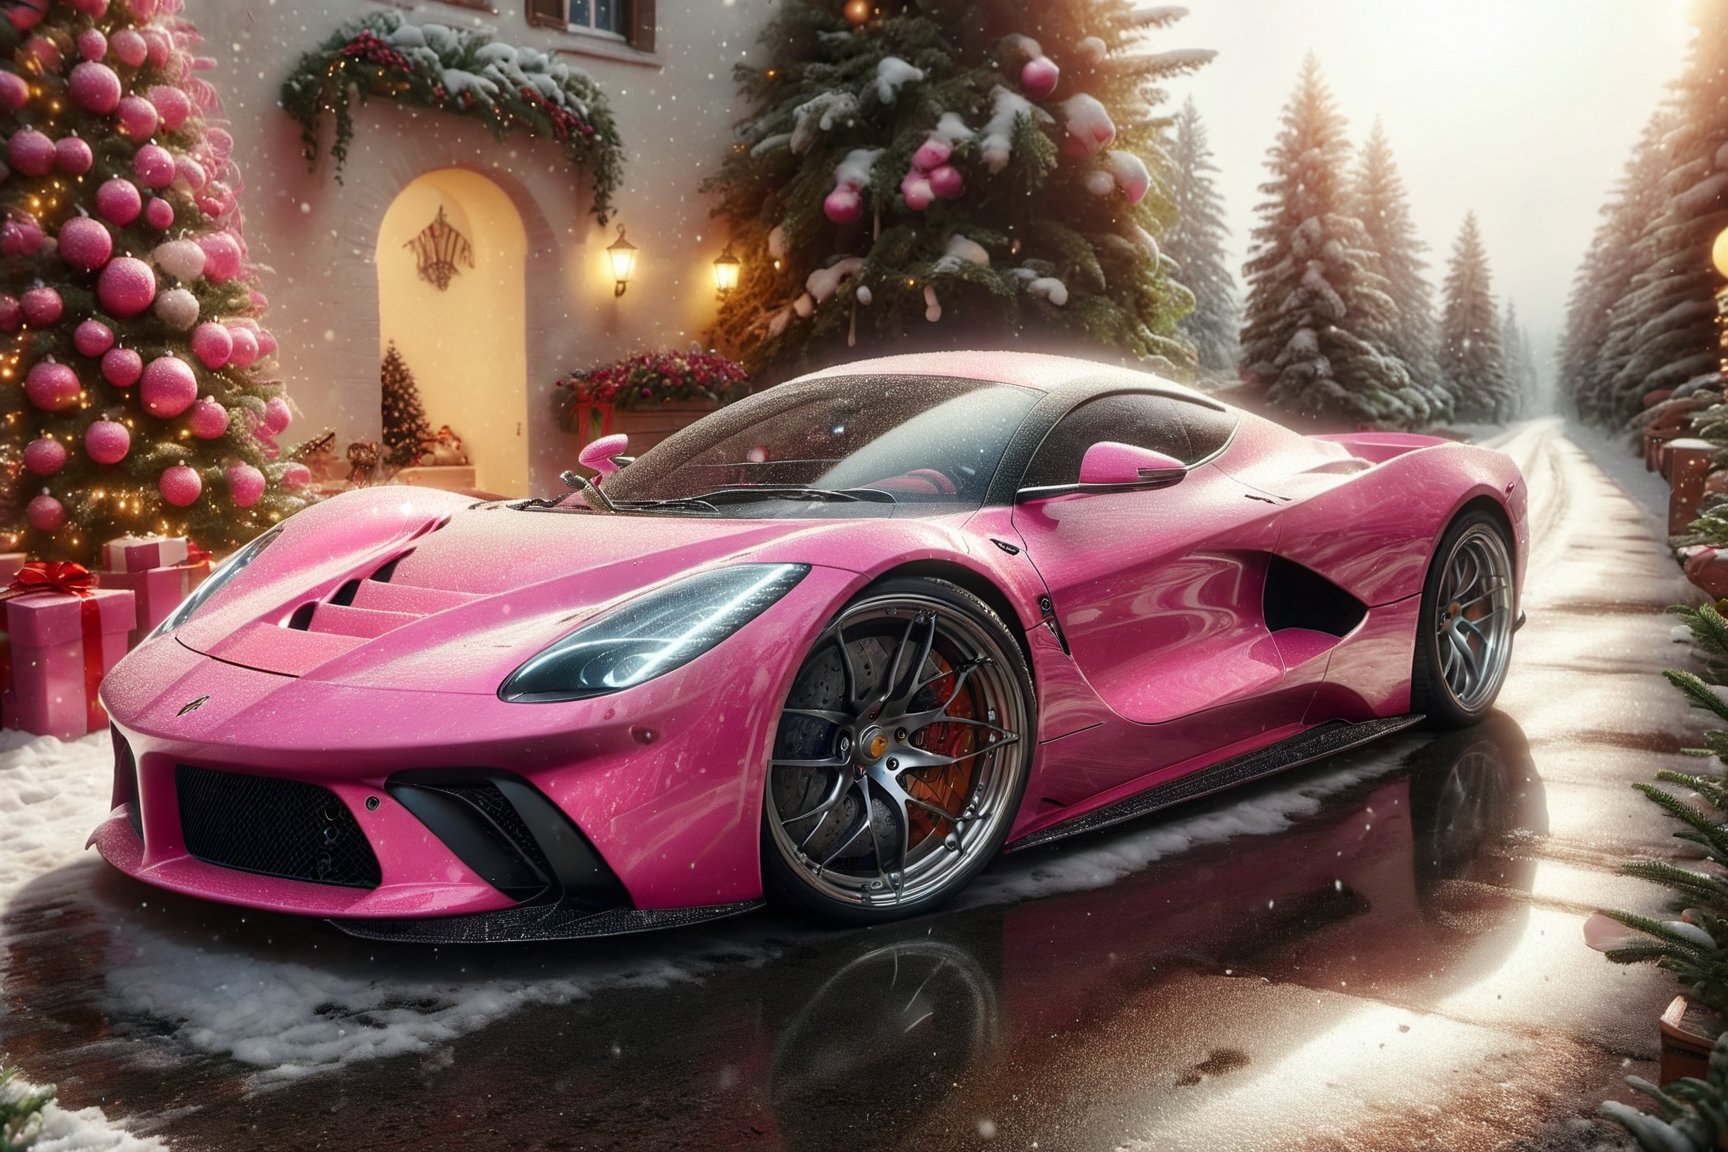 skptheme,a pink sports super car